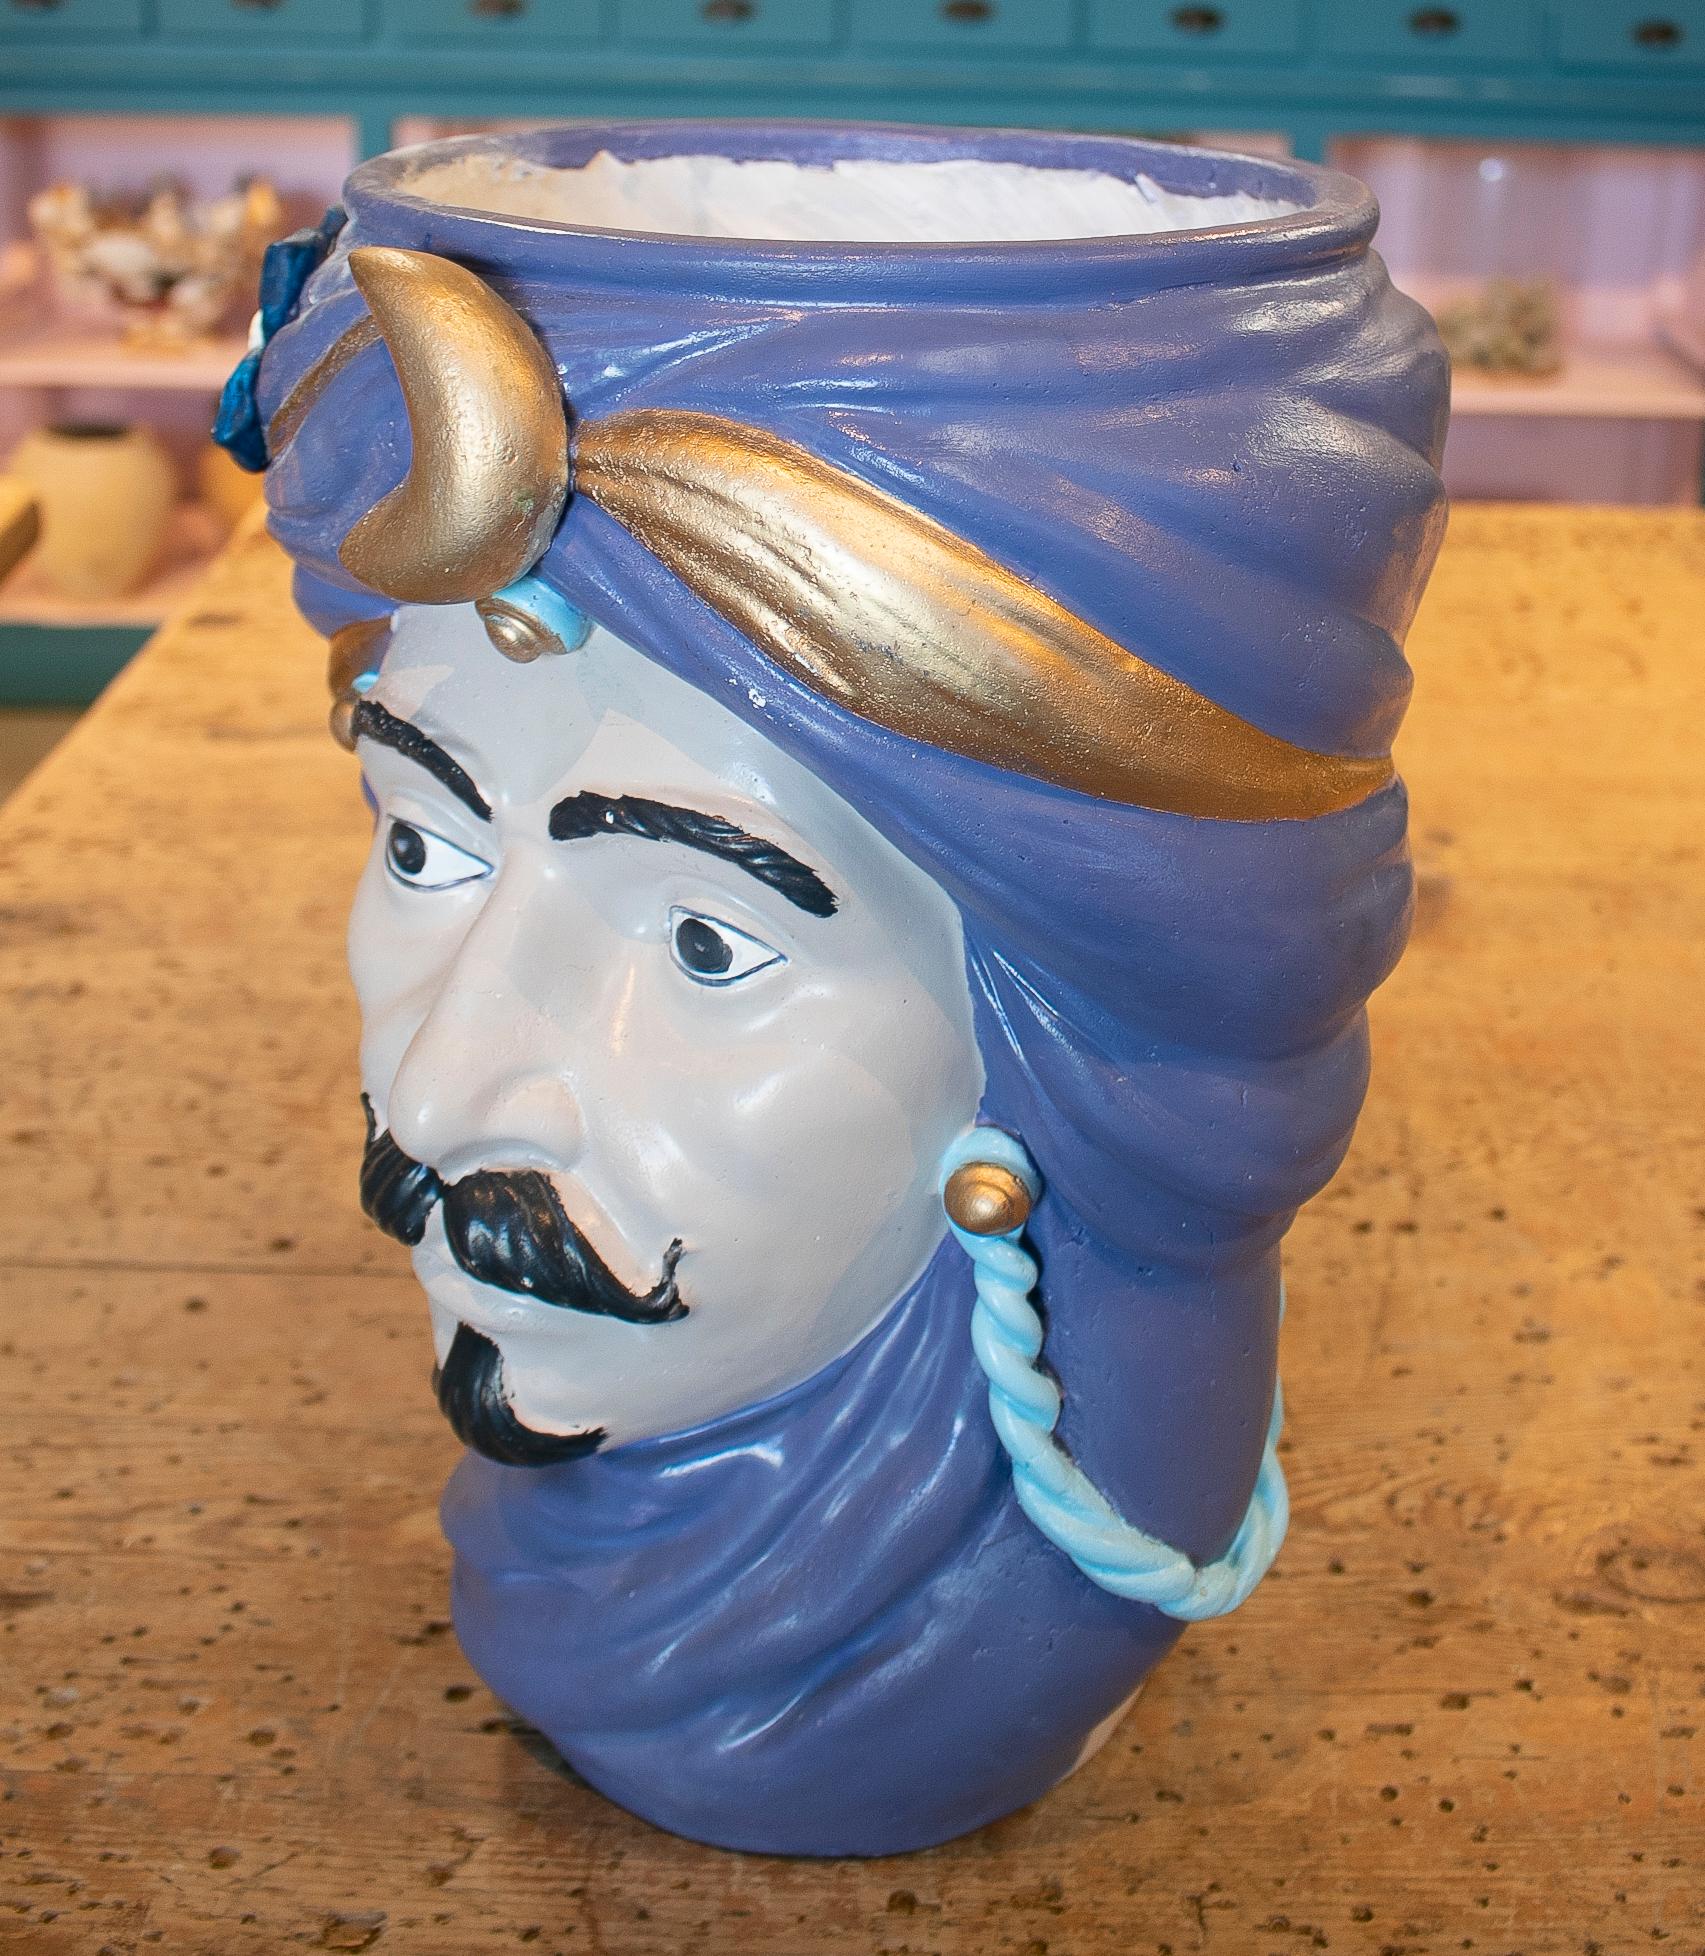 1980s Spanish hand painted ceramic vase representing an Arab figure.